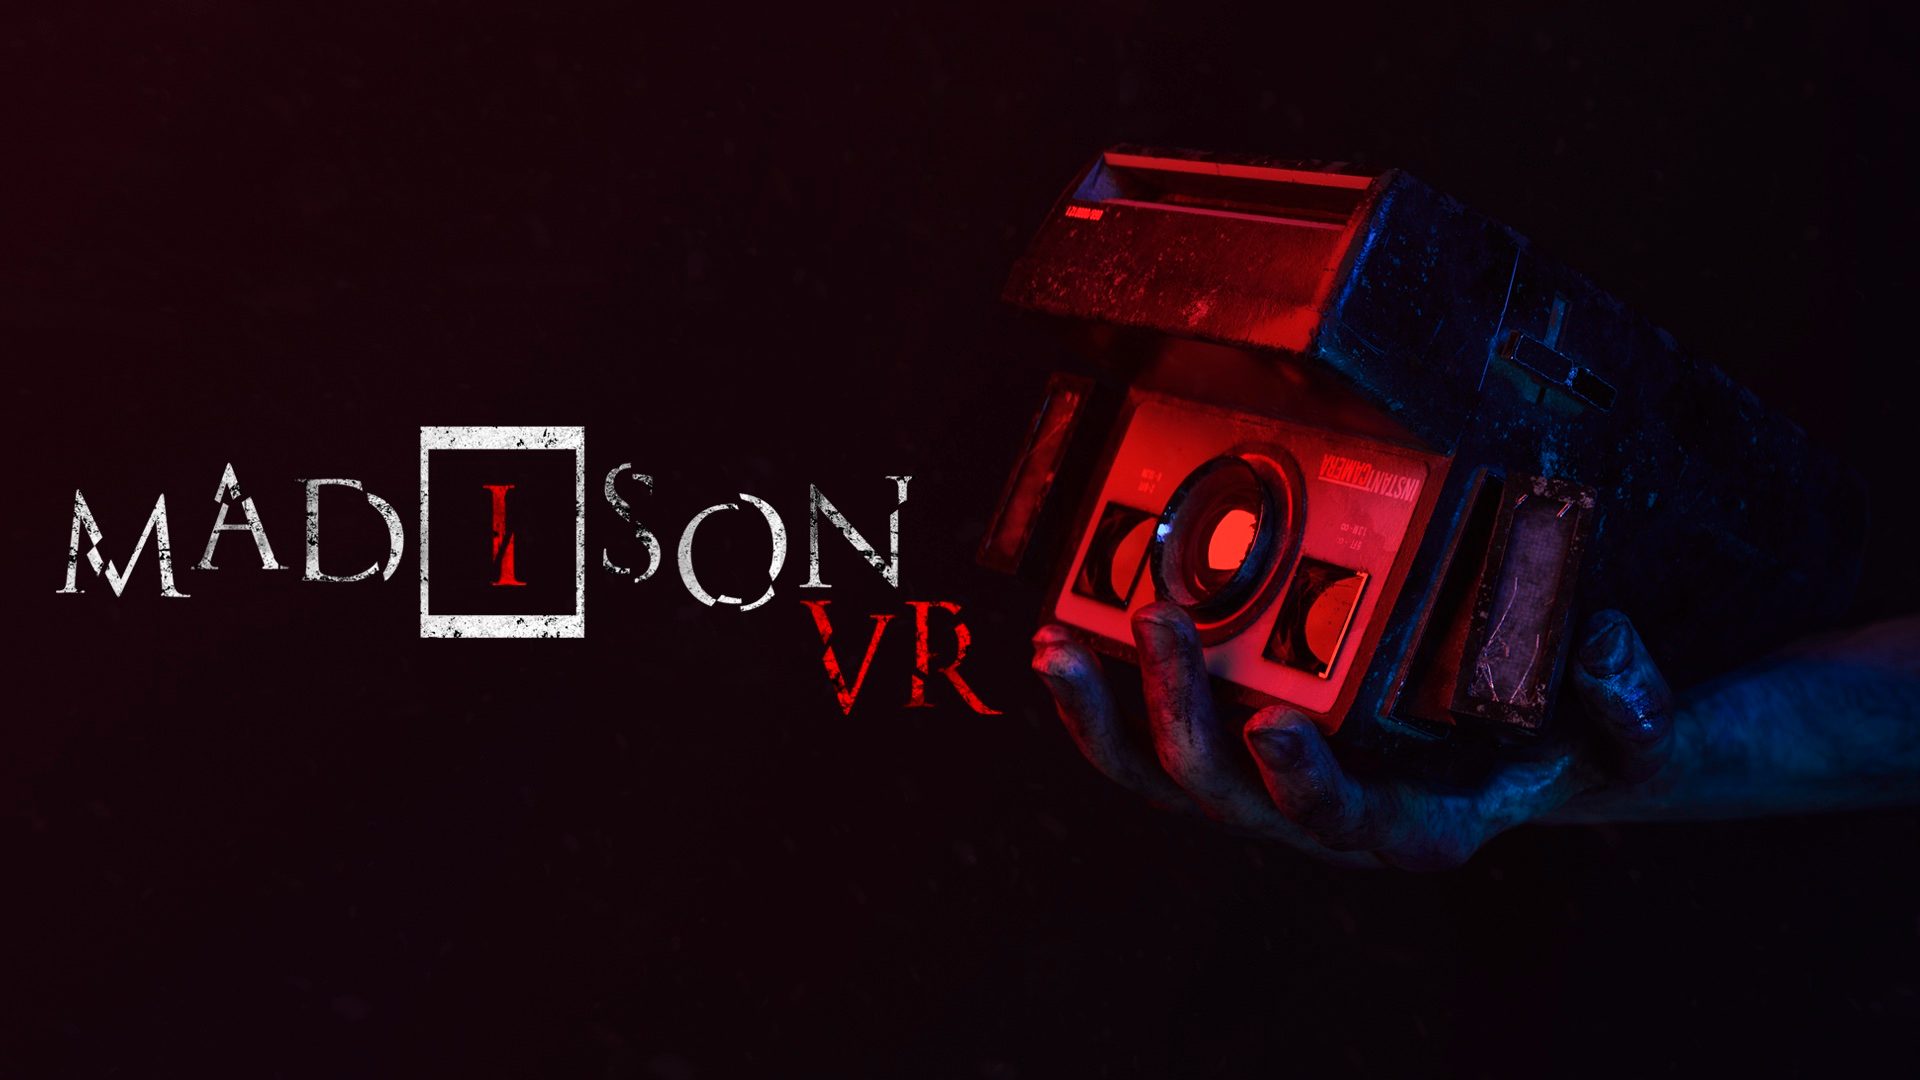 Madison VR. Playstation 5